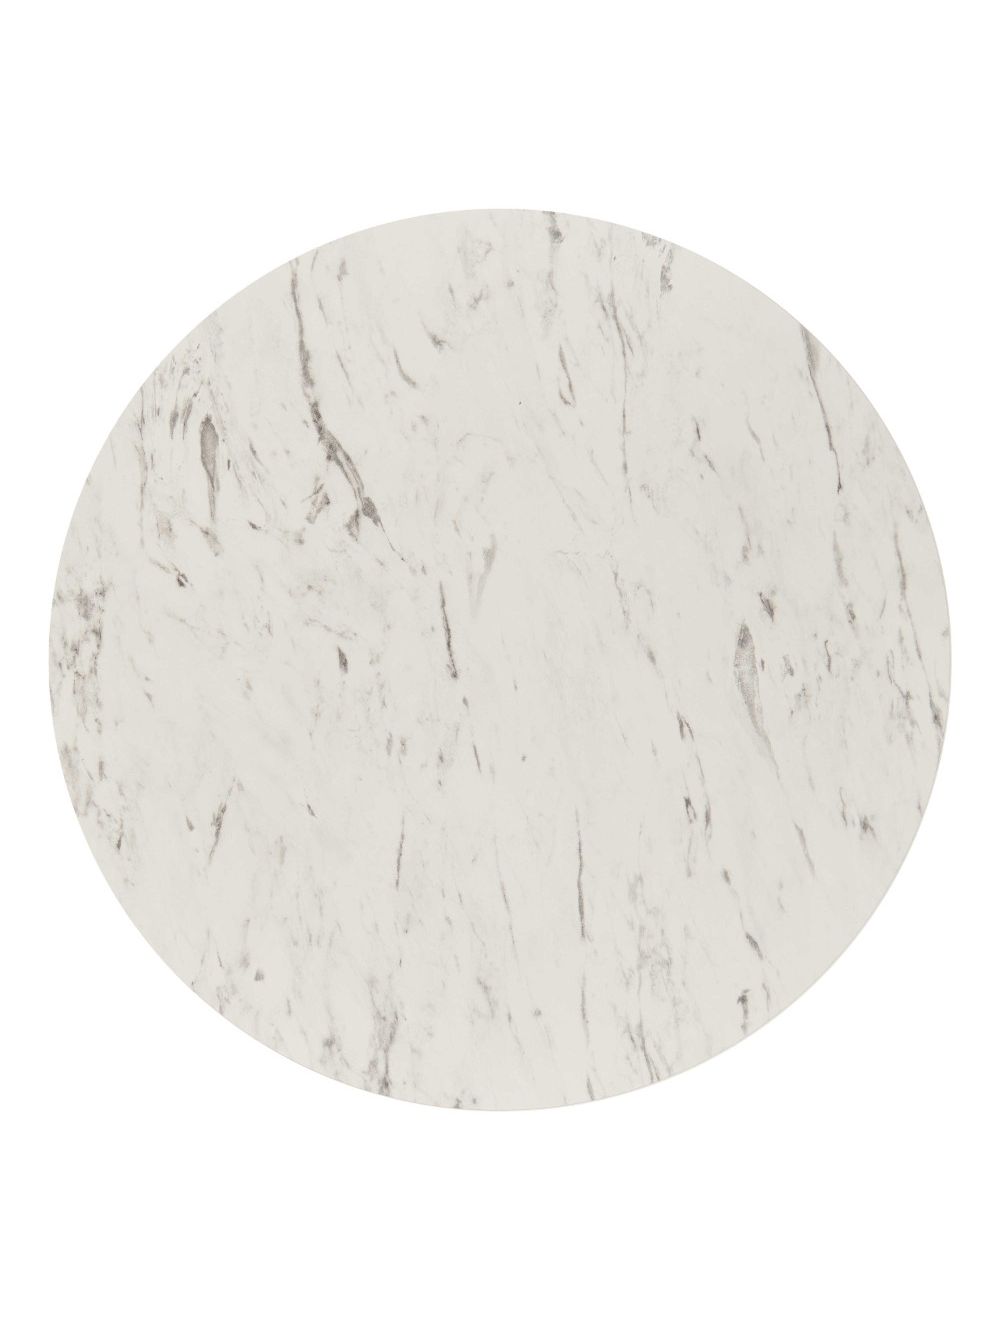 Laminate Top: Egger White Carrara Marble with Matching Edge (Various Size)